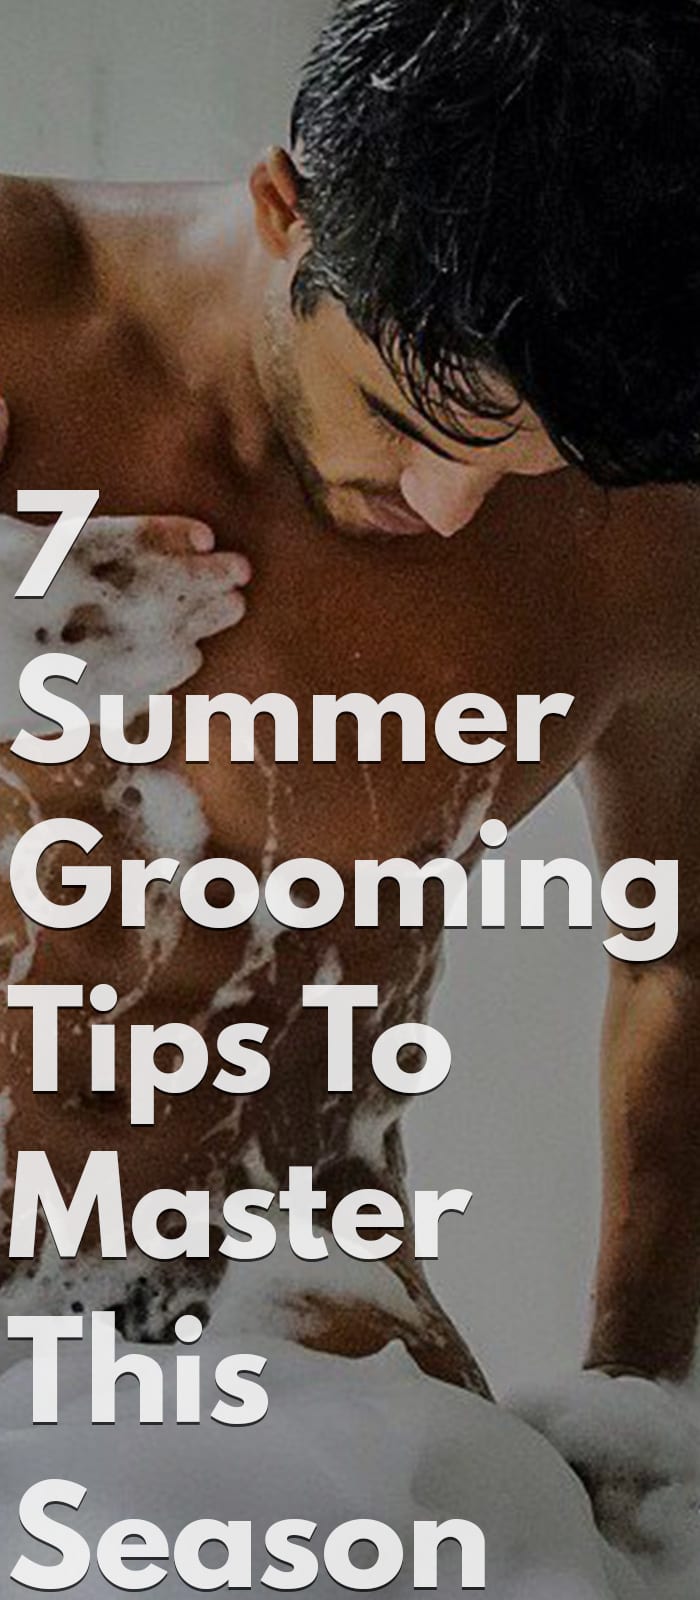 7 Summer Grooming Tips To Master This Season